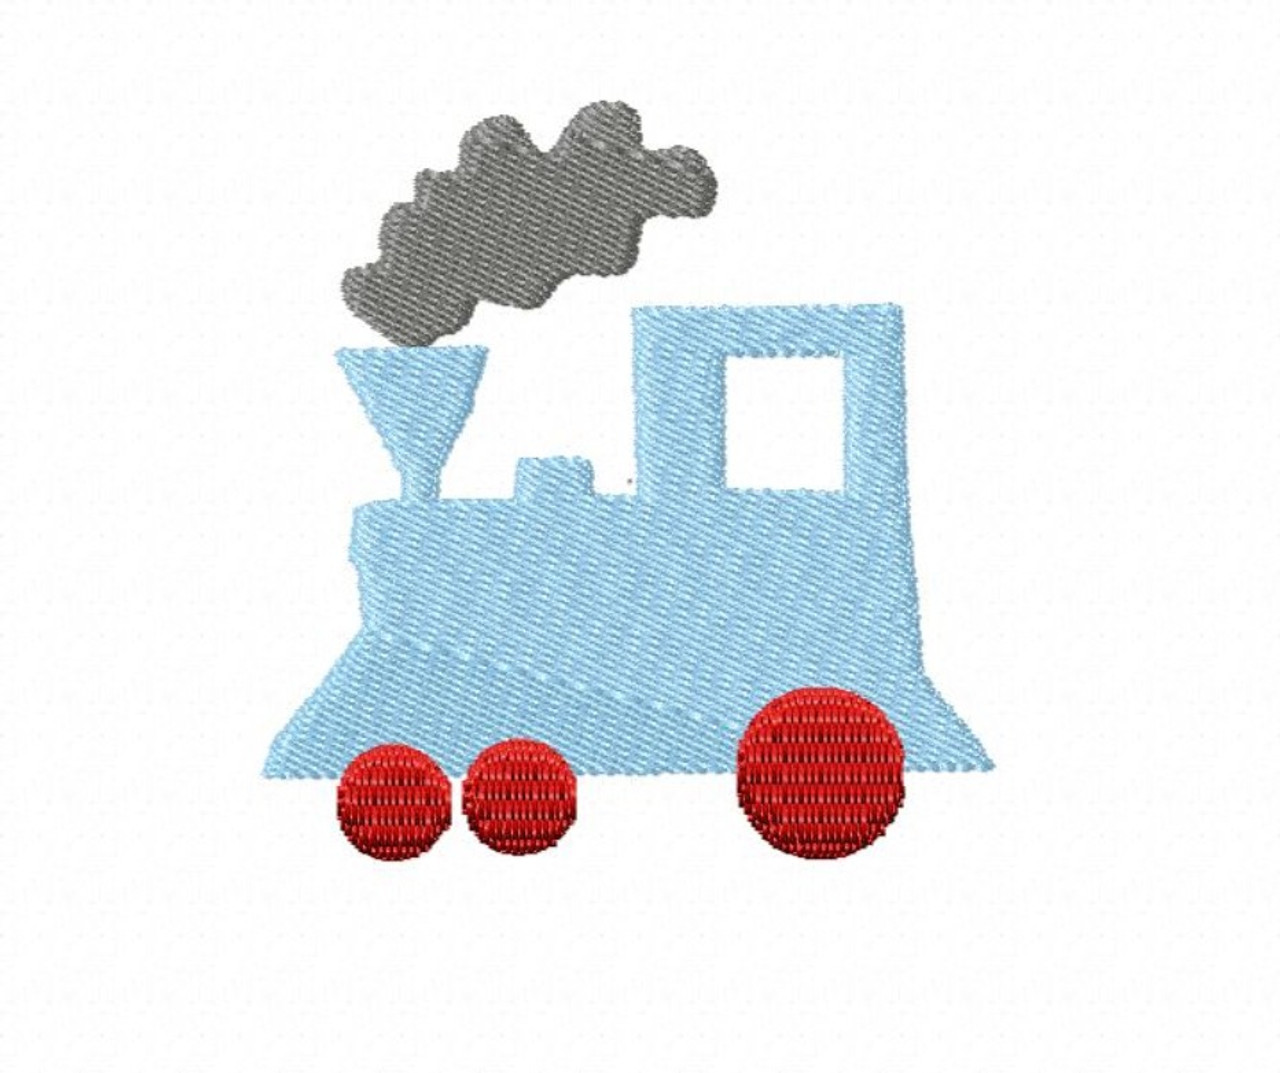 Train Engine and Tender Applique Machine Embroidery Design Boy 